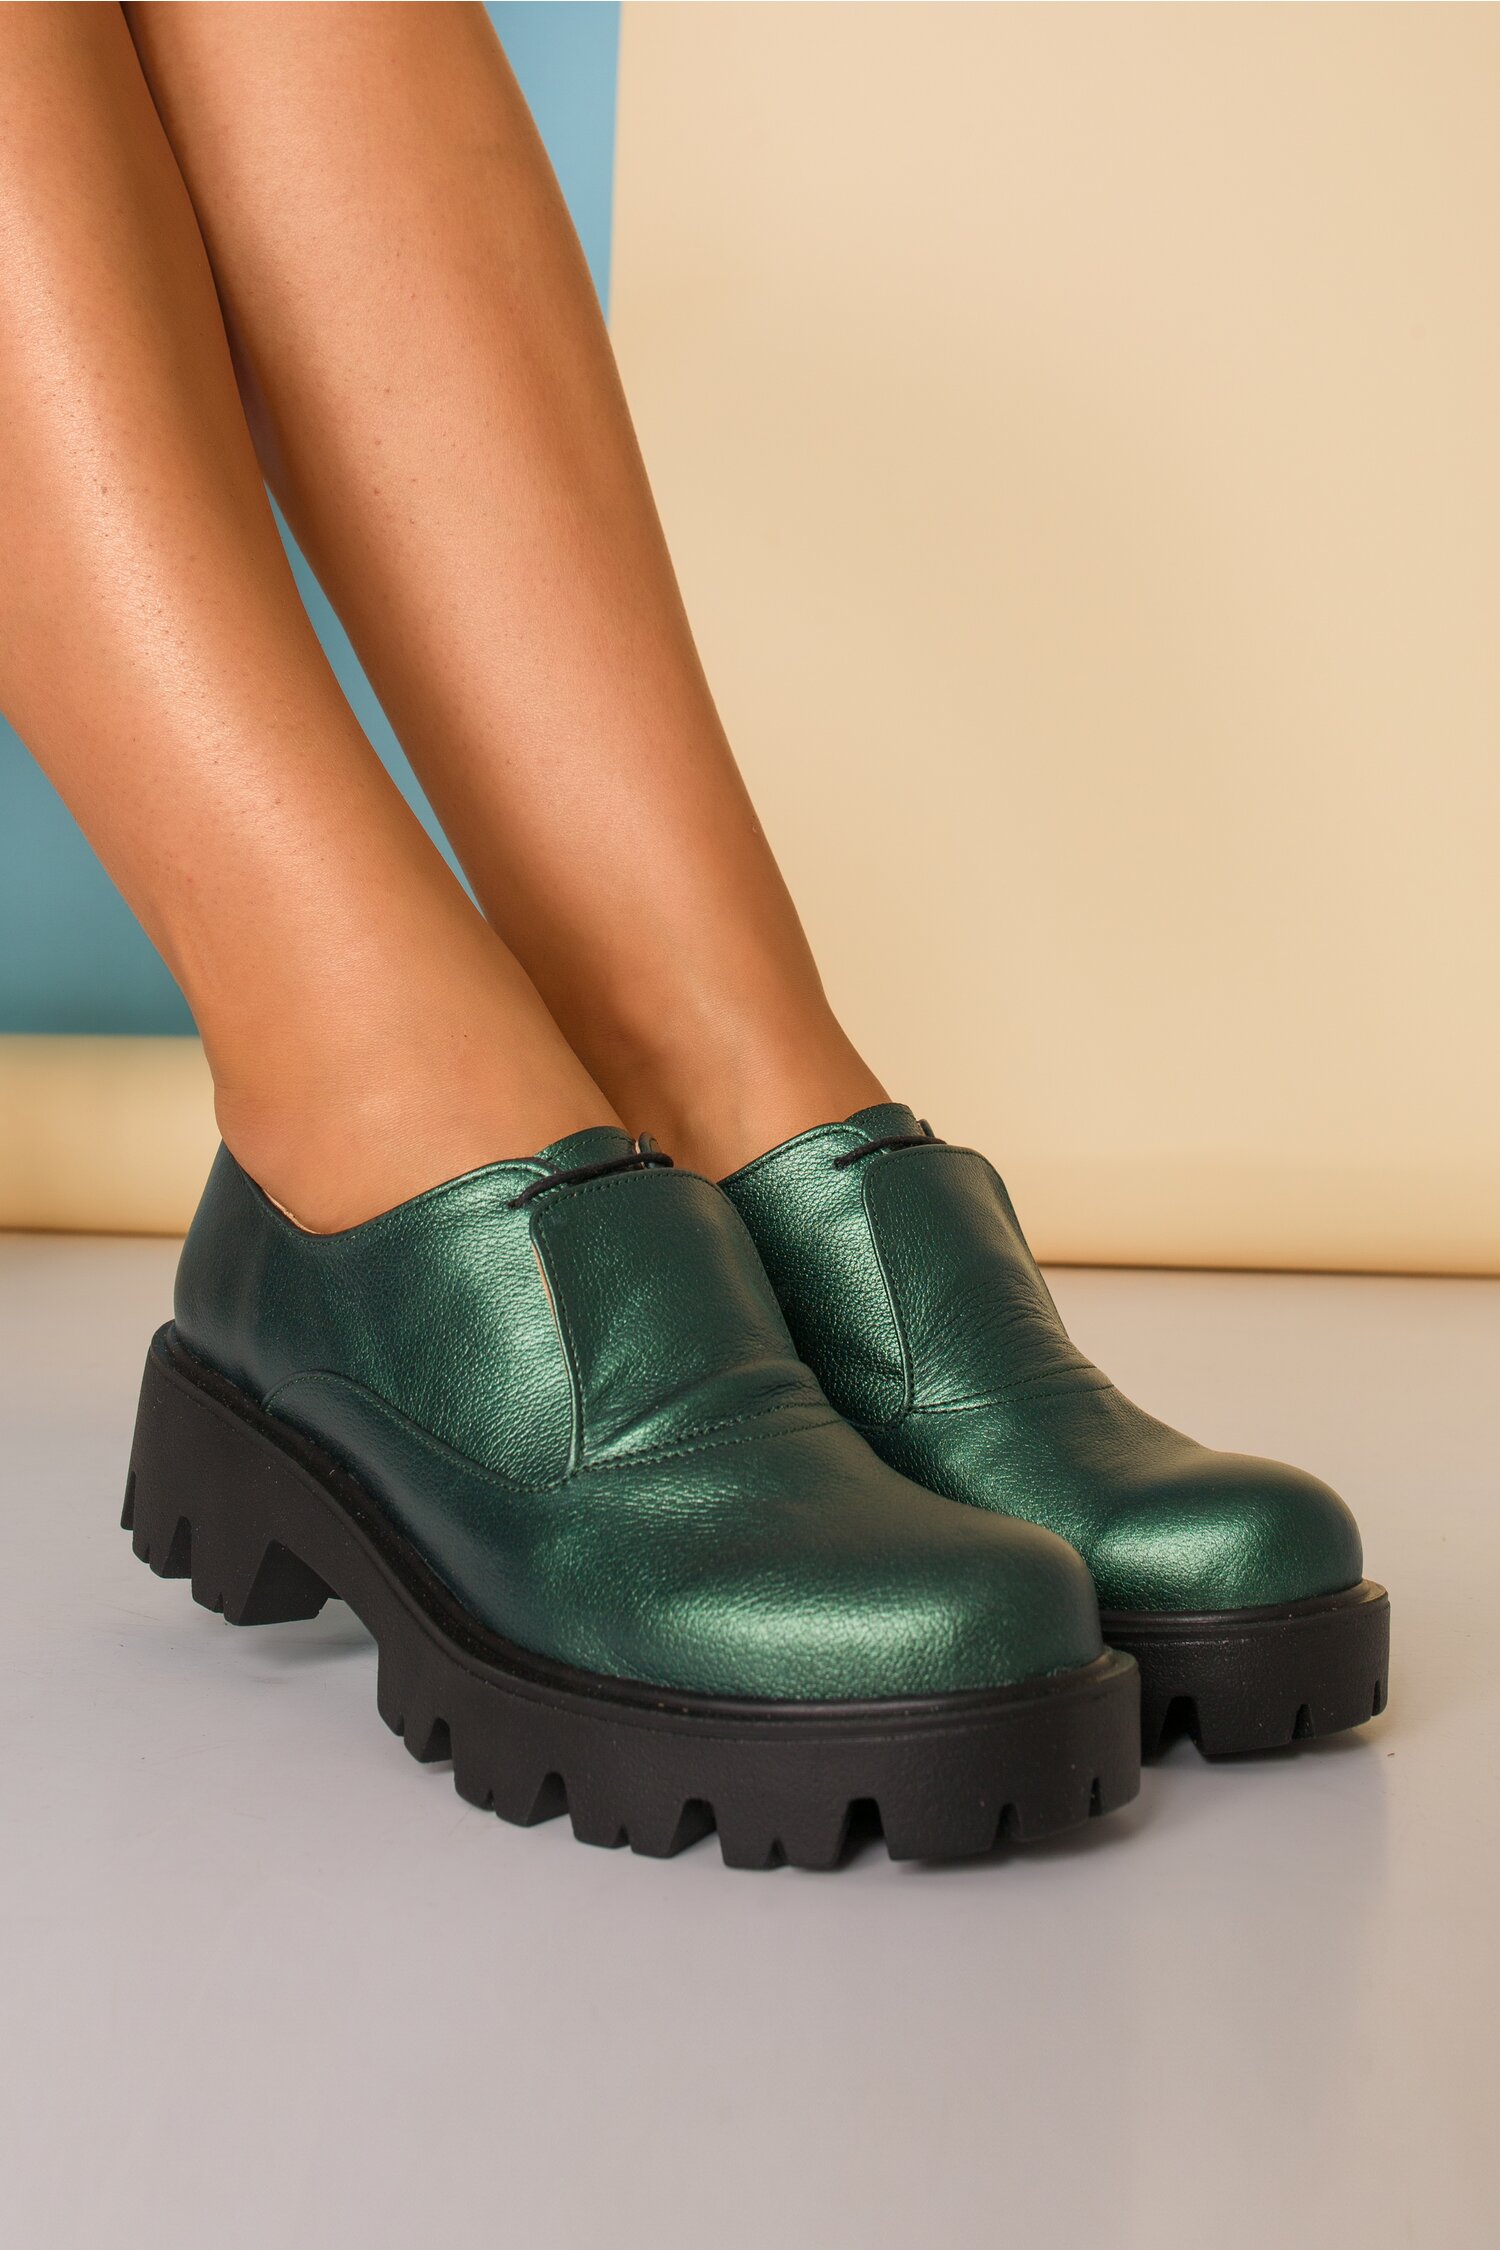 Pantofi verzi cu talpa joasa si limba dubla cu siret dyfashion.ro imagine megaplaza.ro